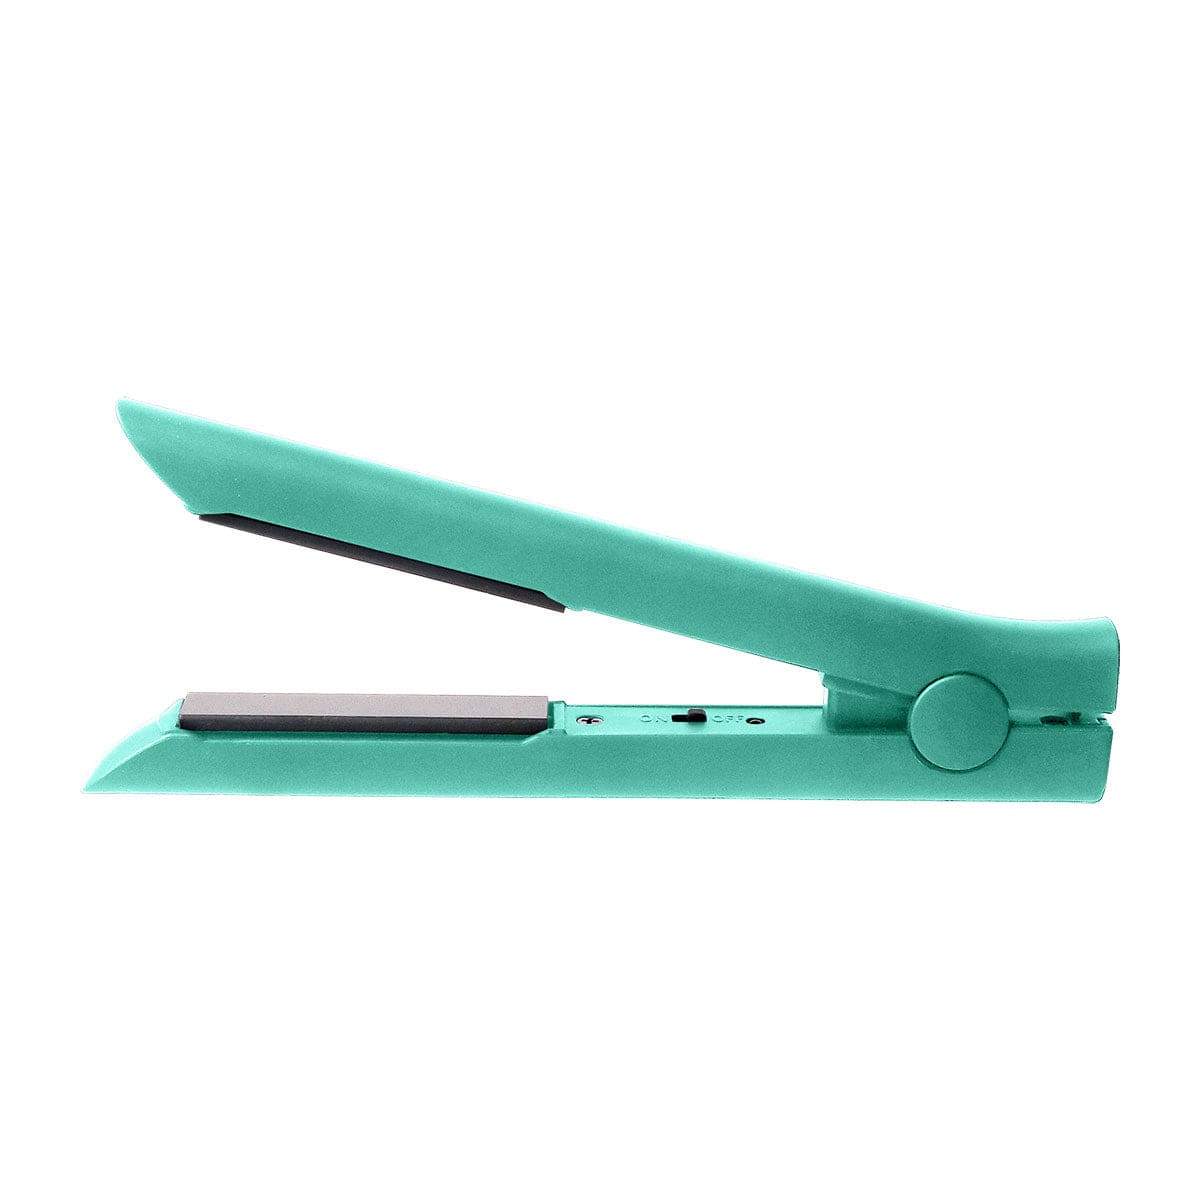 Ariabeauty Hair Straightener - Hair Iron Teal Hair Tools Travel Set - Mini Blow Dryer & Hair Straightener